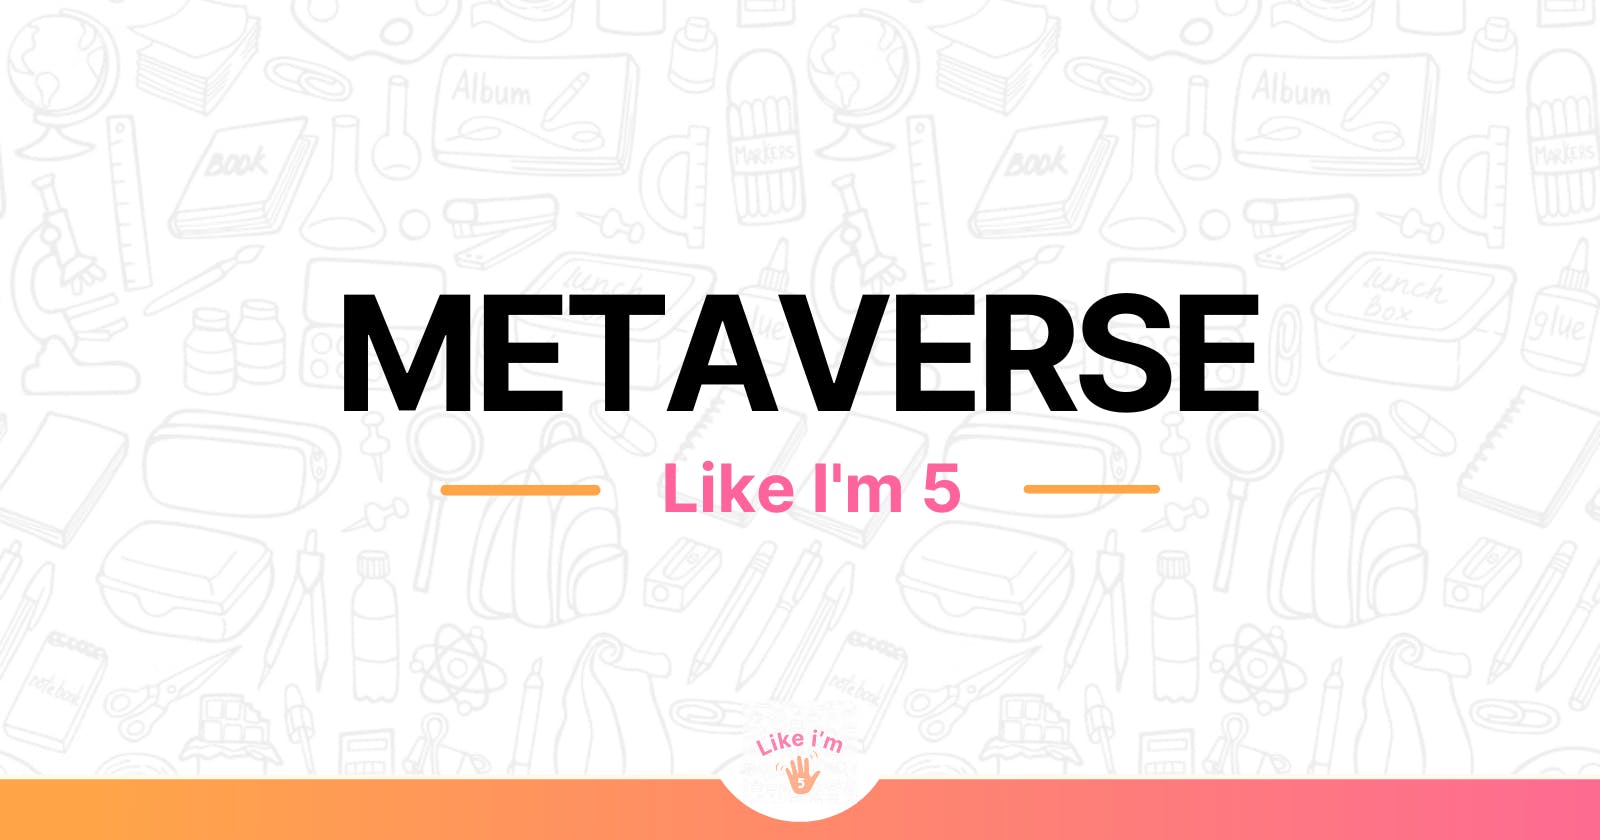 Metaverse, Like I'm 5